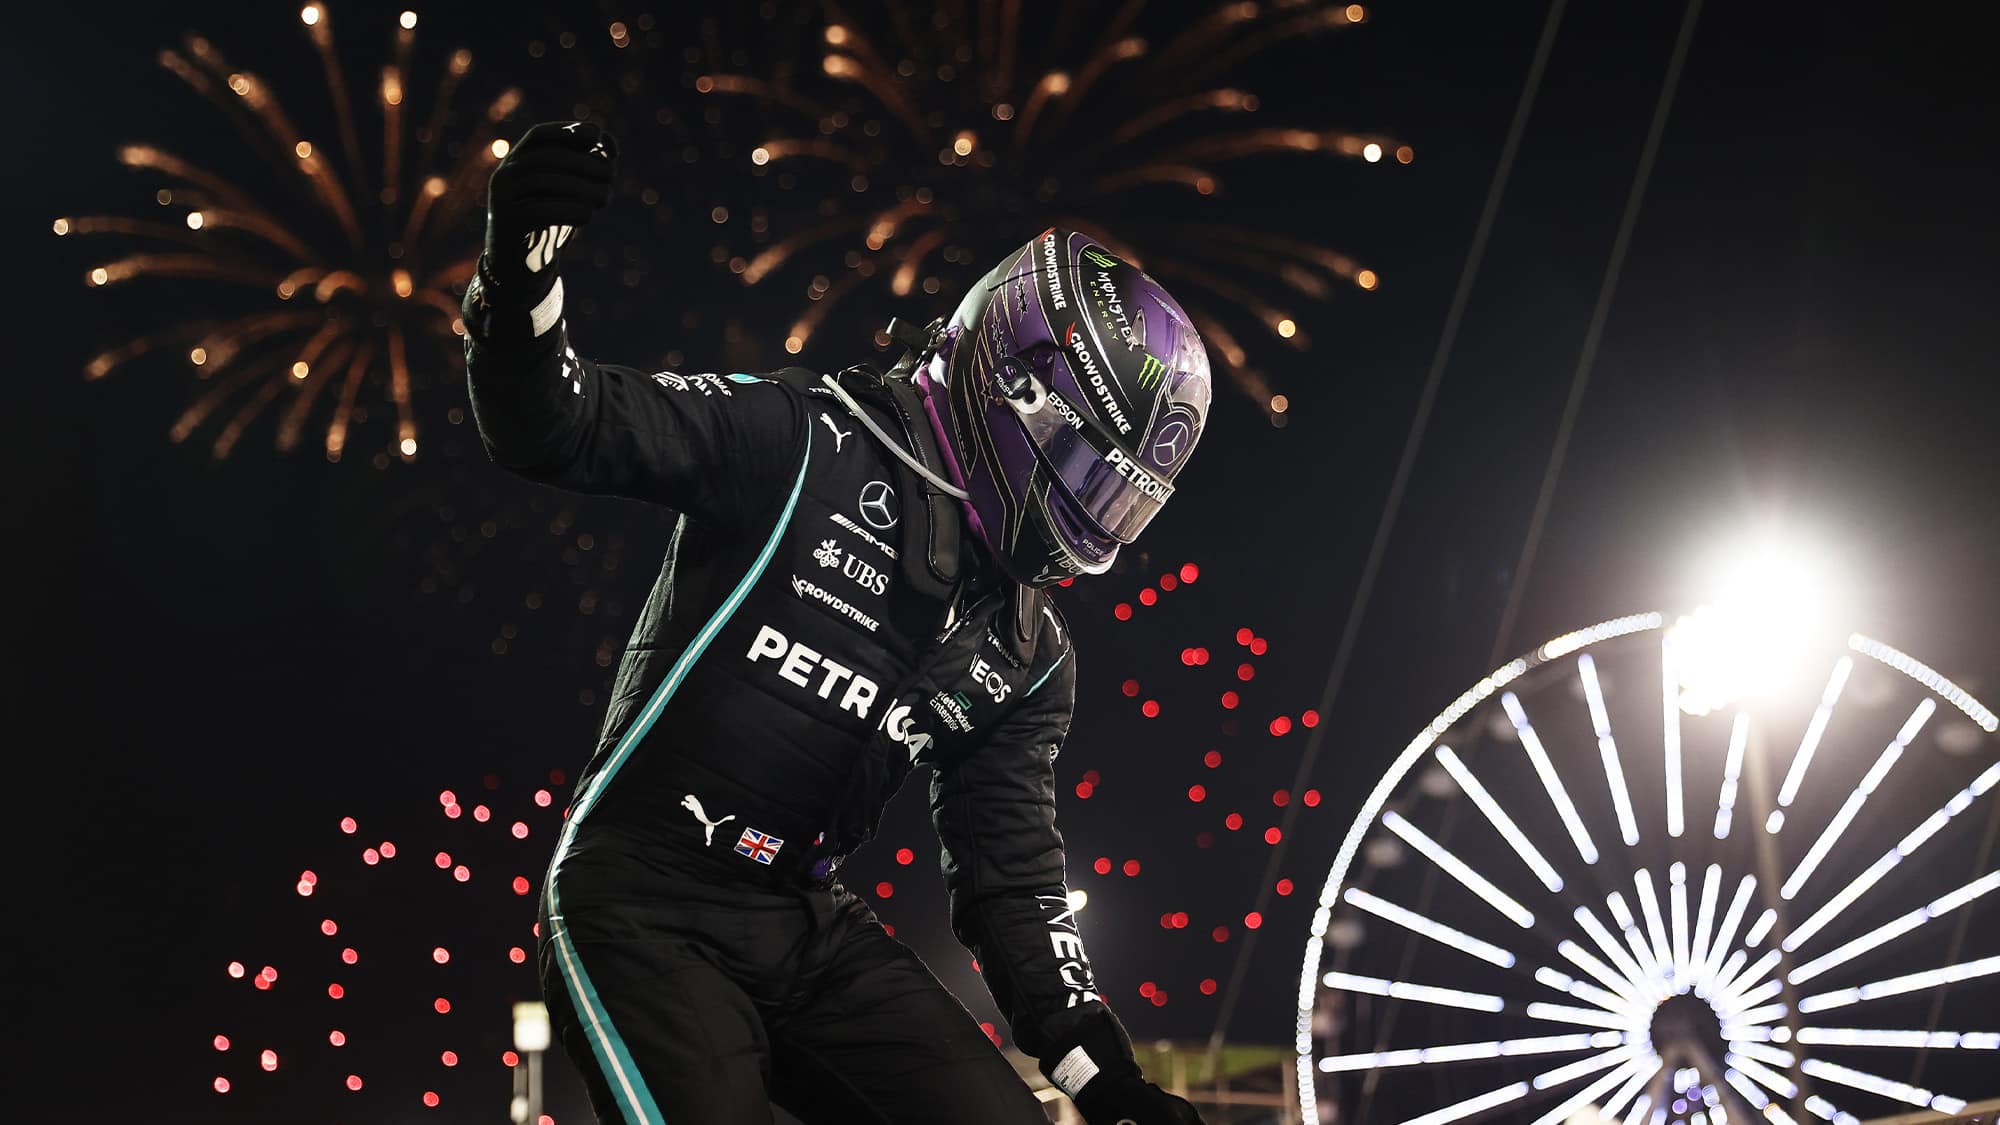 Lewis Hamilton celebrated victory in the 2021 Bahrain Grand Prix